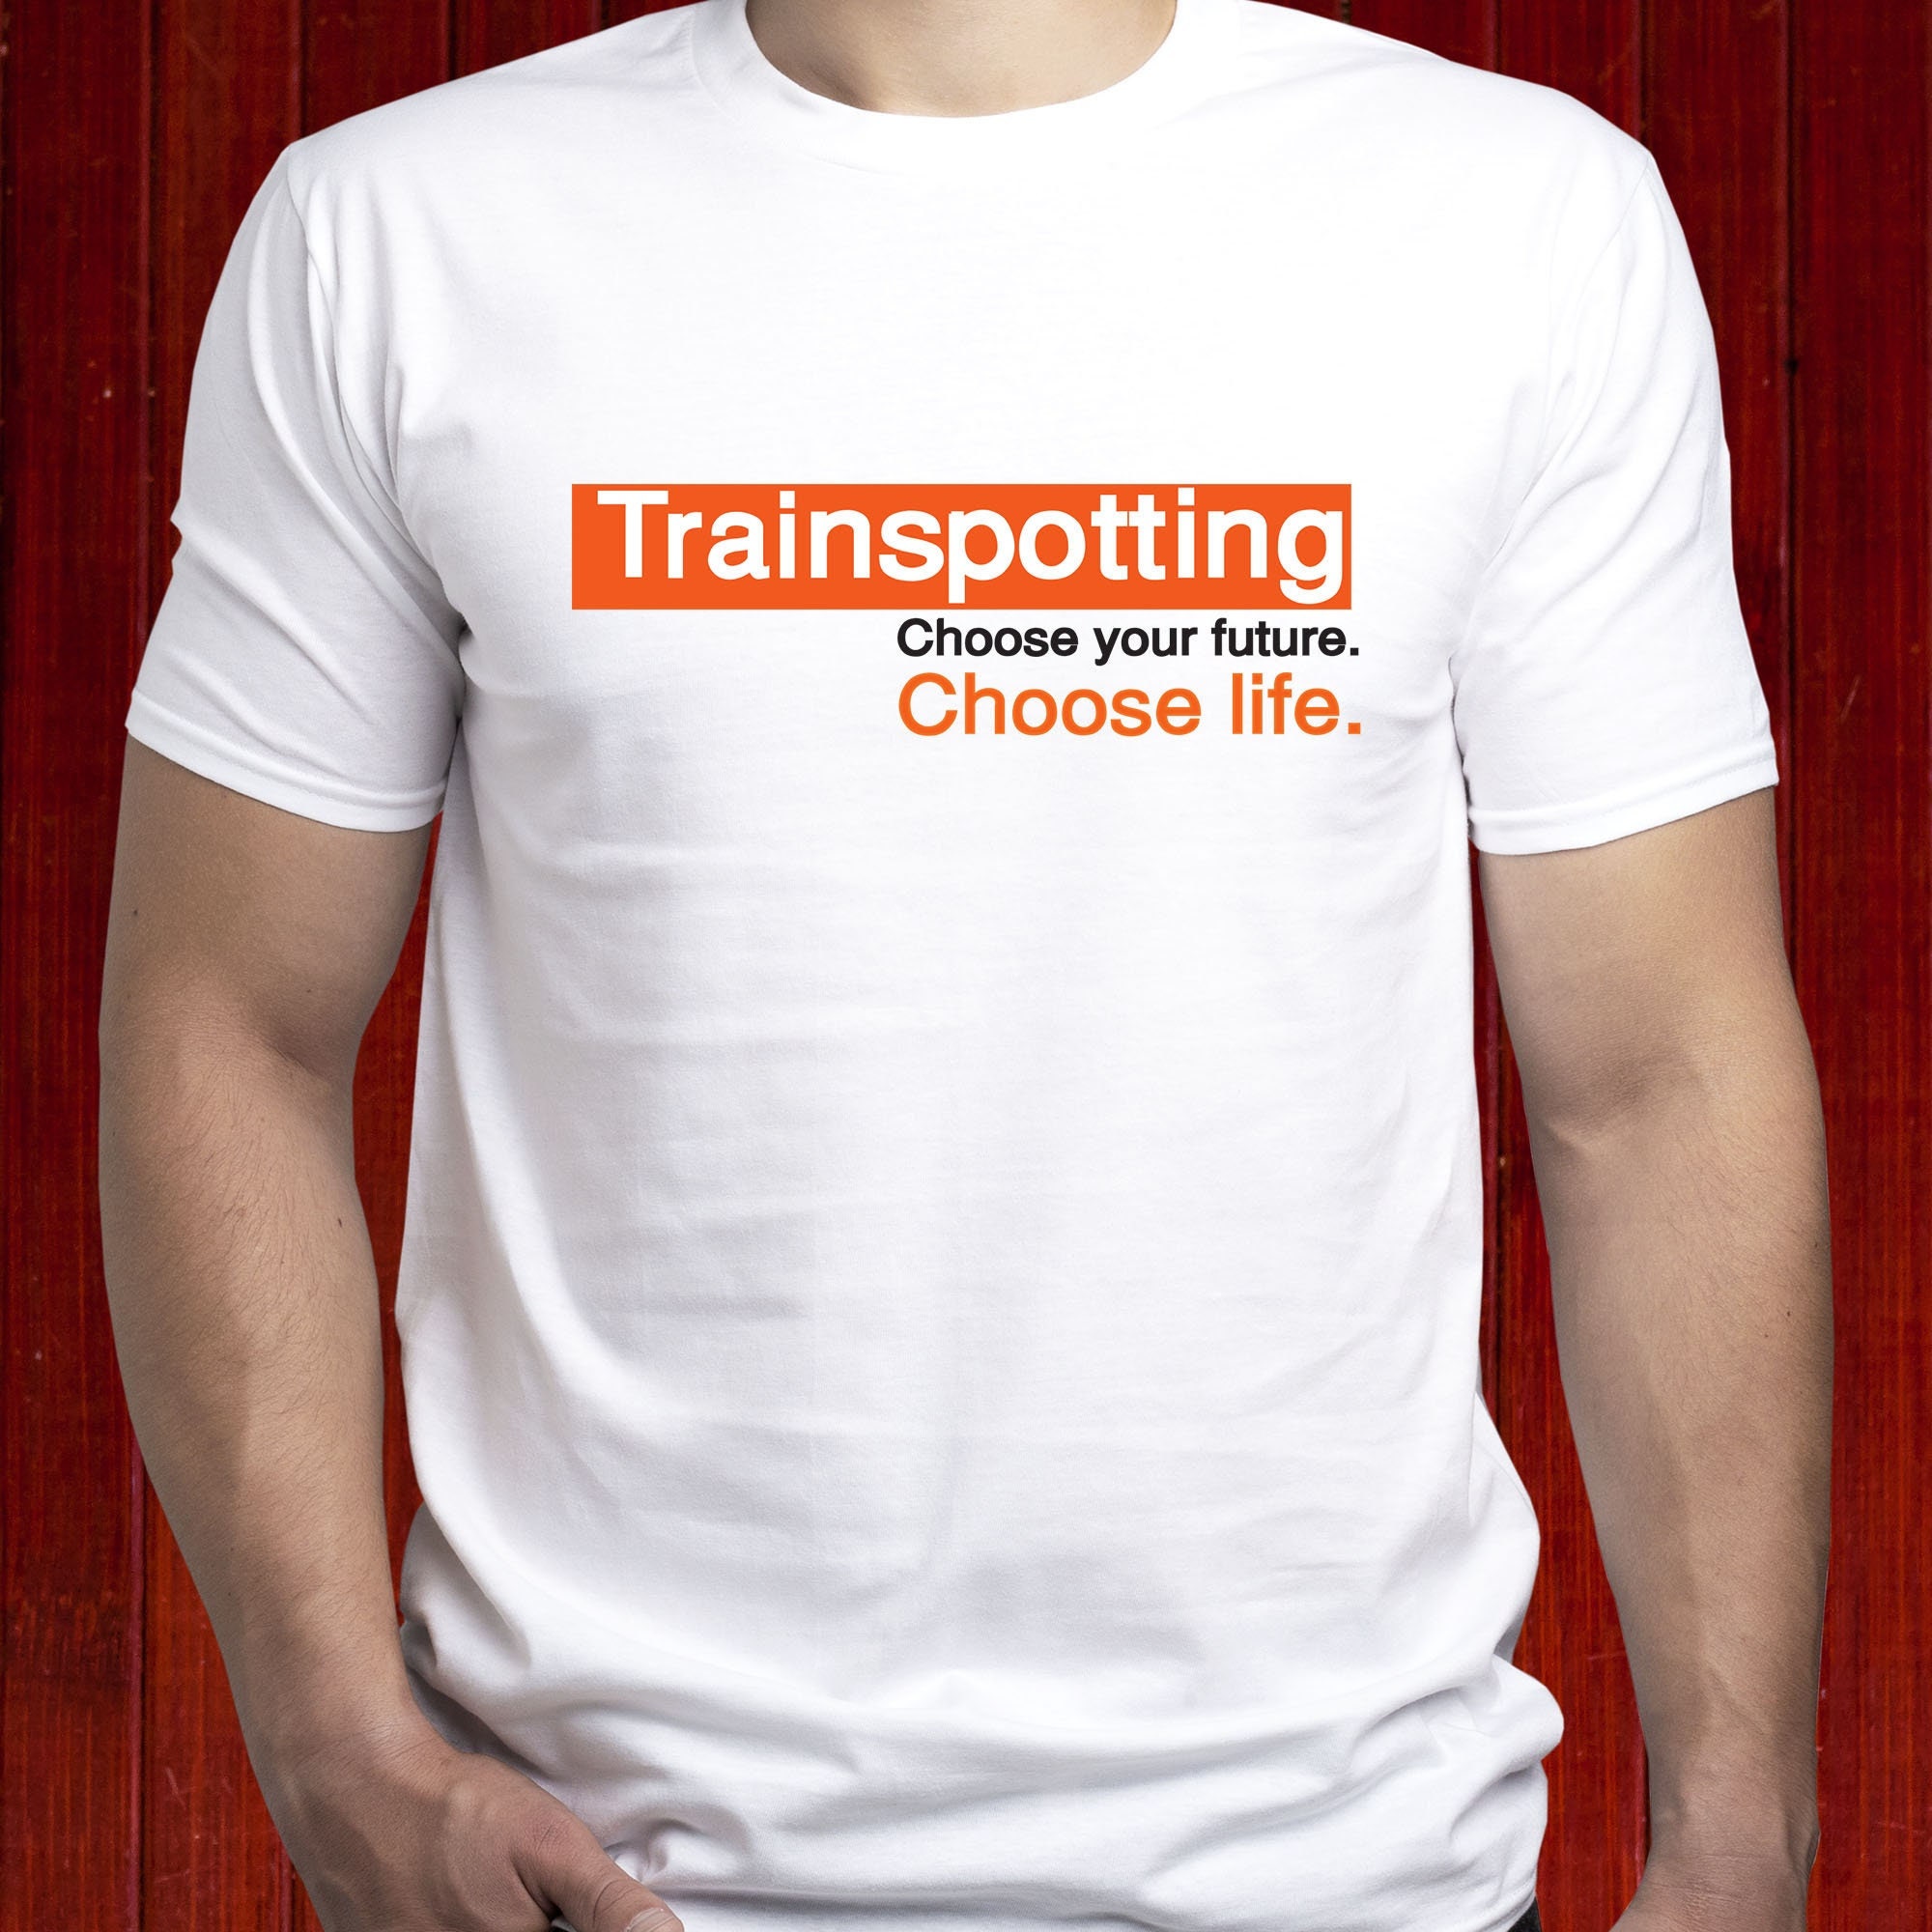 Choose life choose future. Choose Life Trainspotting футболка. Trainspotting t Shirt.